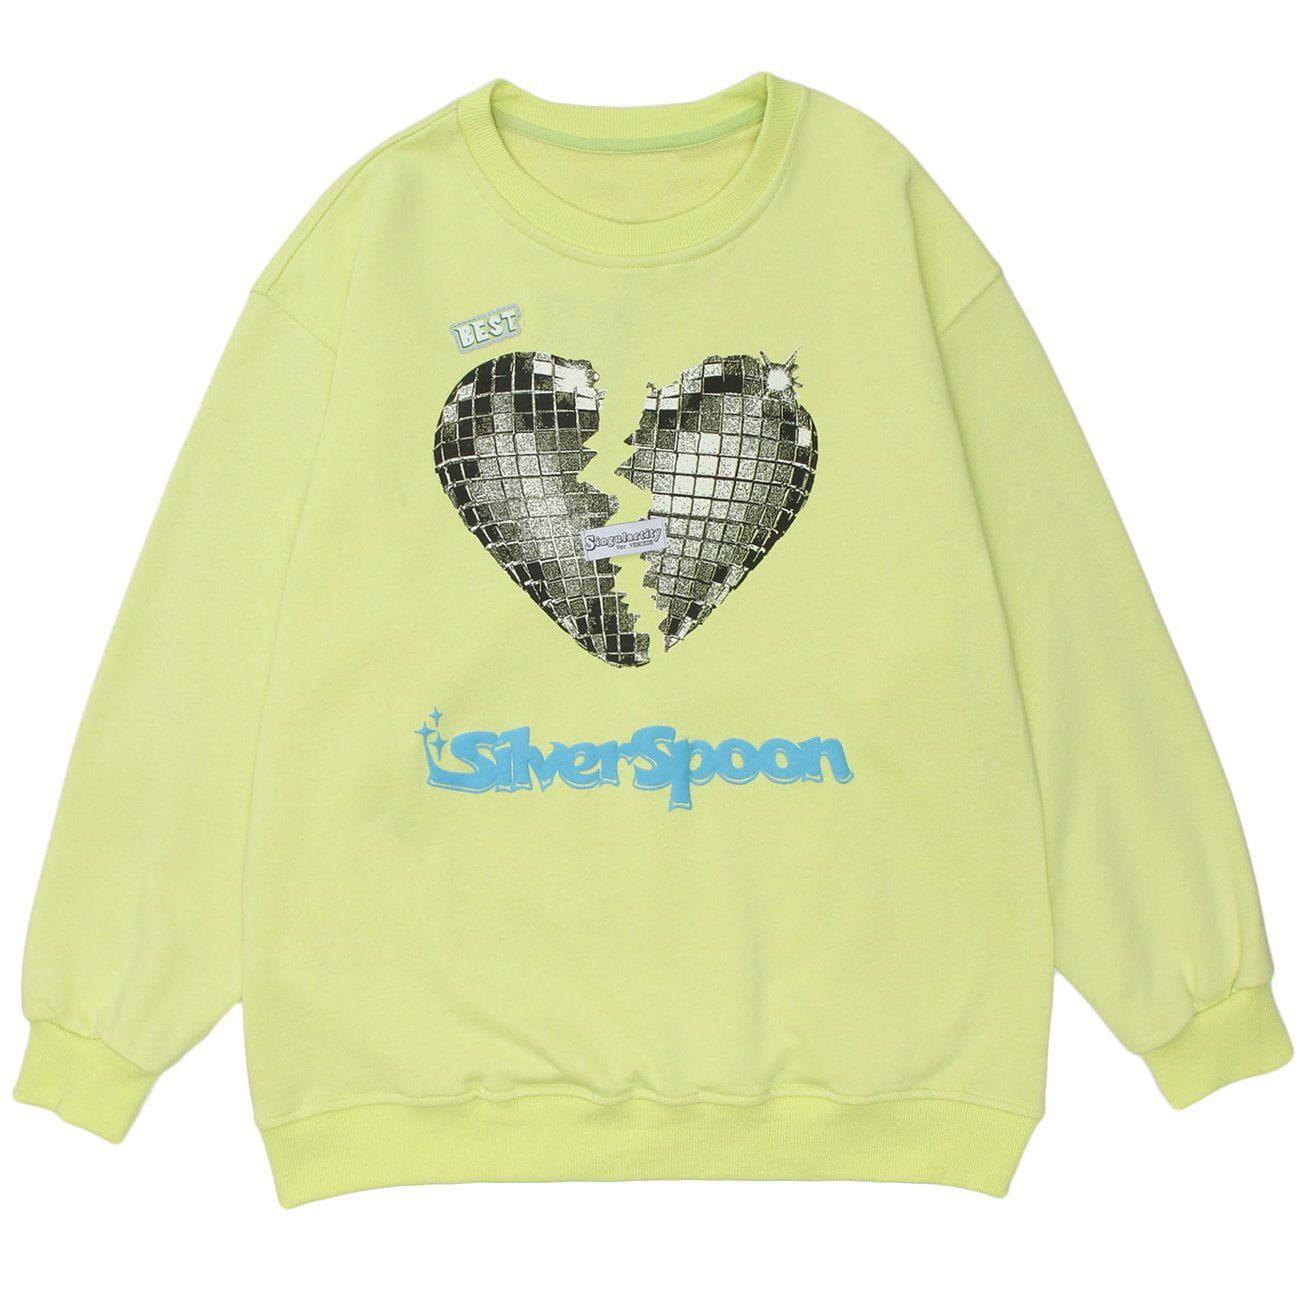 LUXENFY™ - 3D Broken Heart Graphic Sweatshirt luxenfy.com